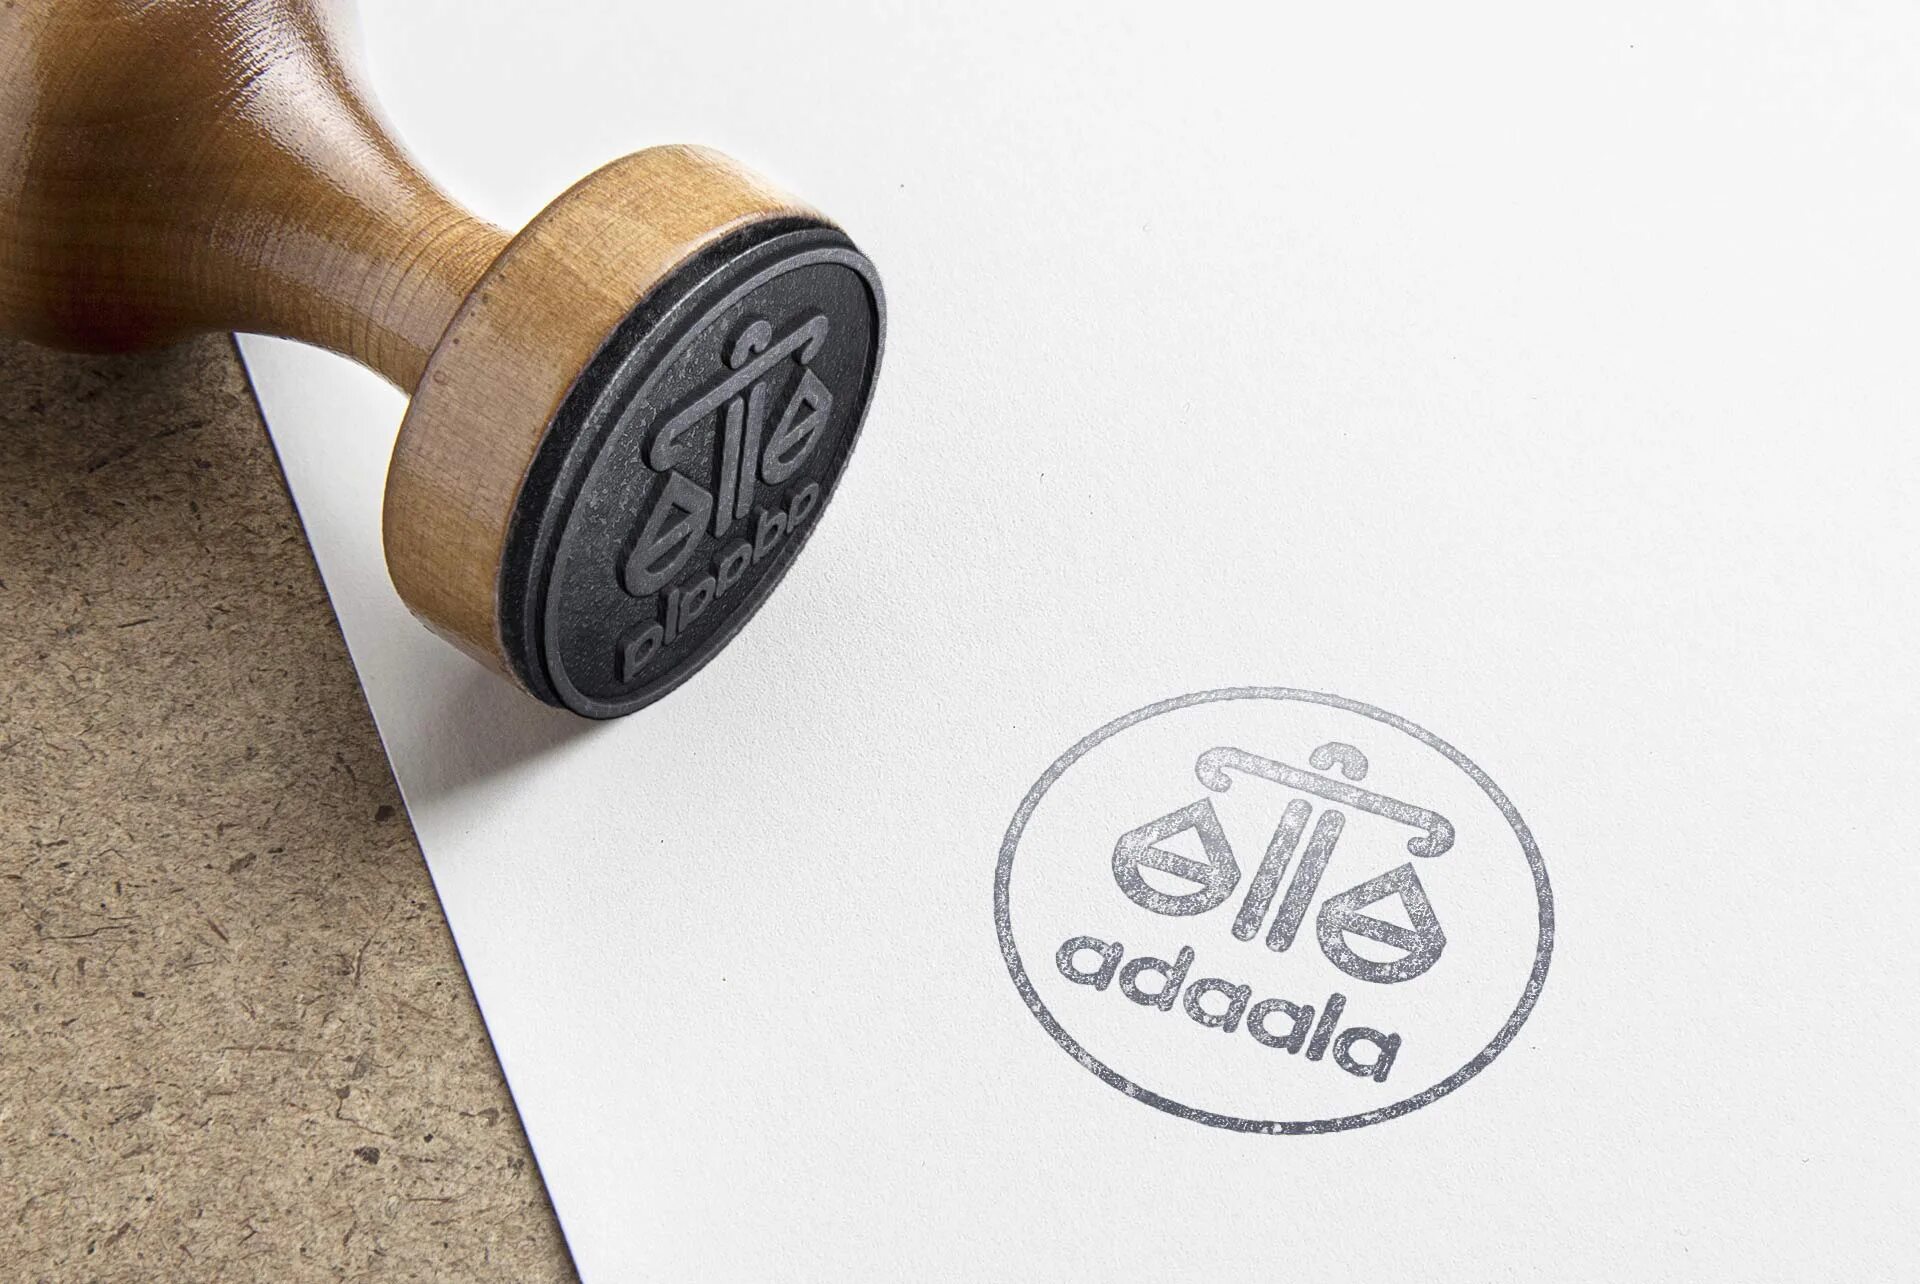 Stamp. Печати и штампы фон. Фоновый штамп. Штамп с логотипом. Штамп для логотипа Wood.